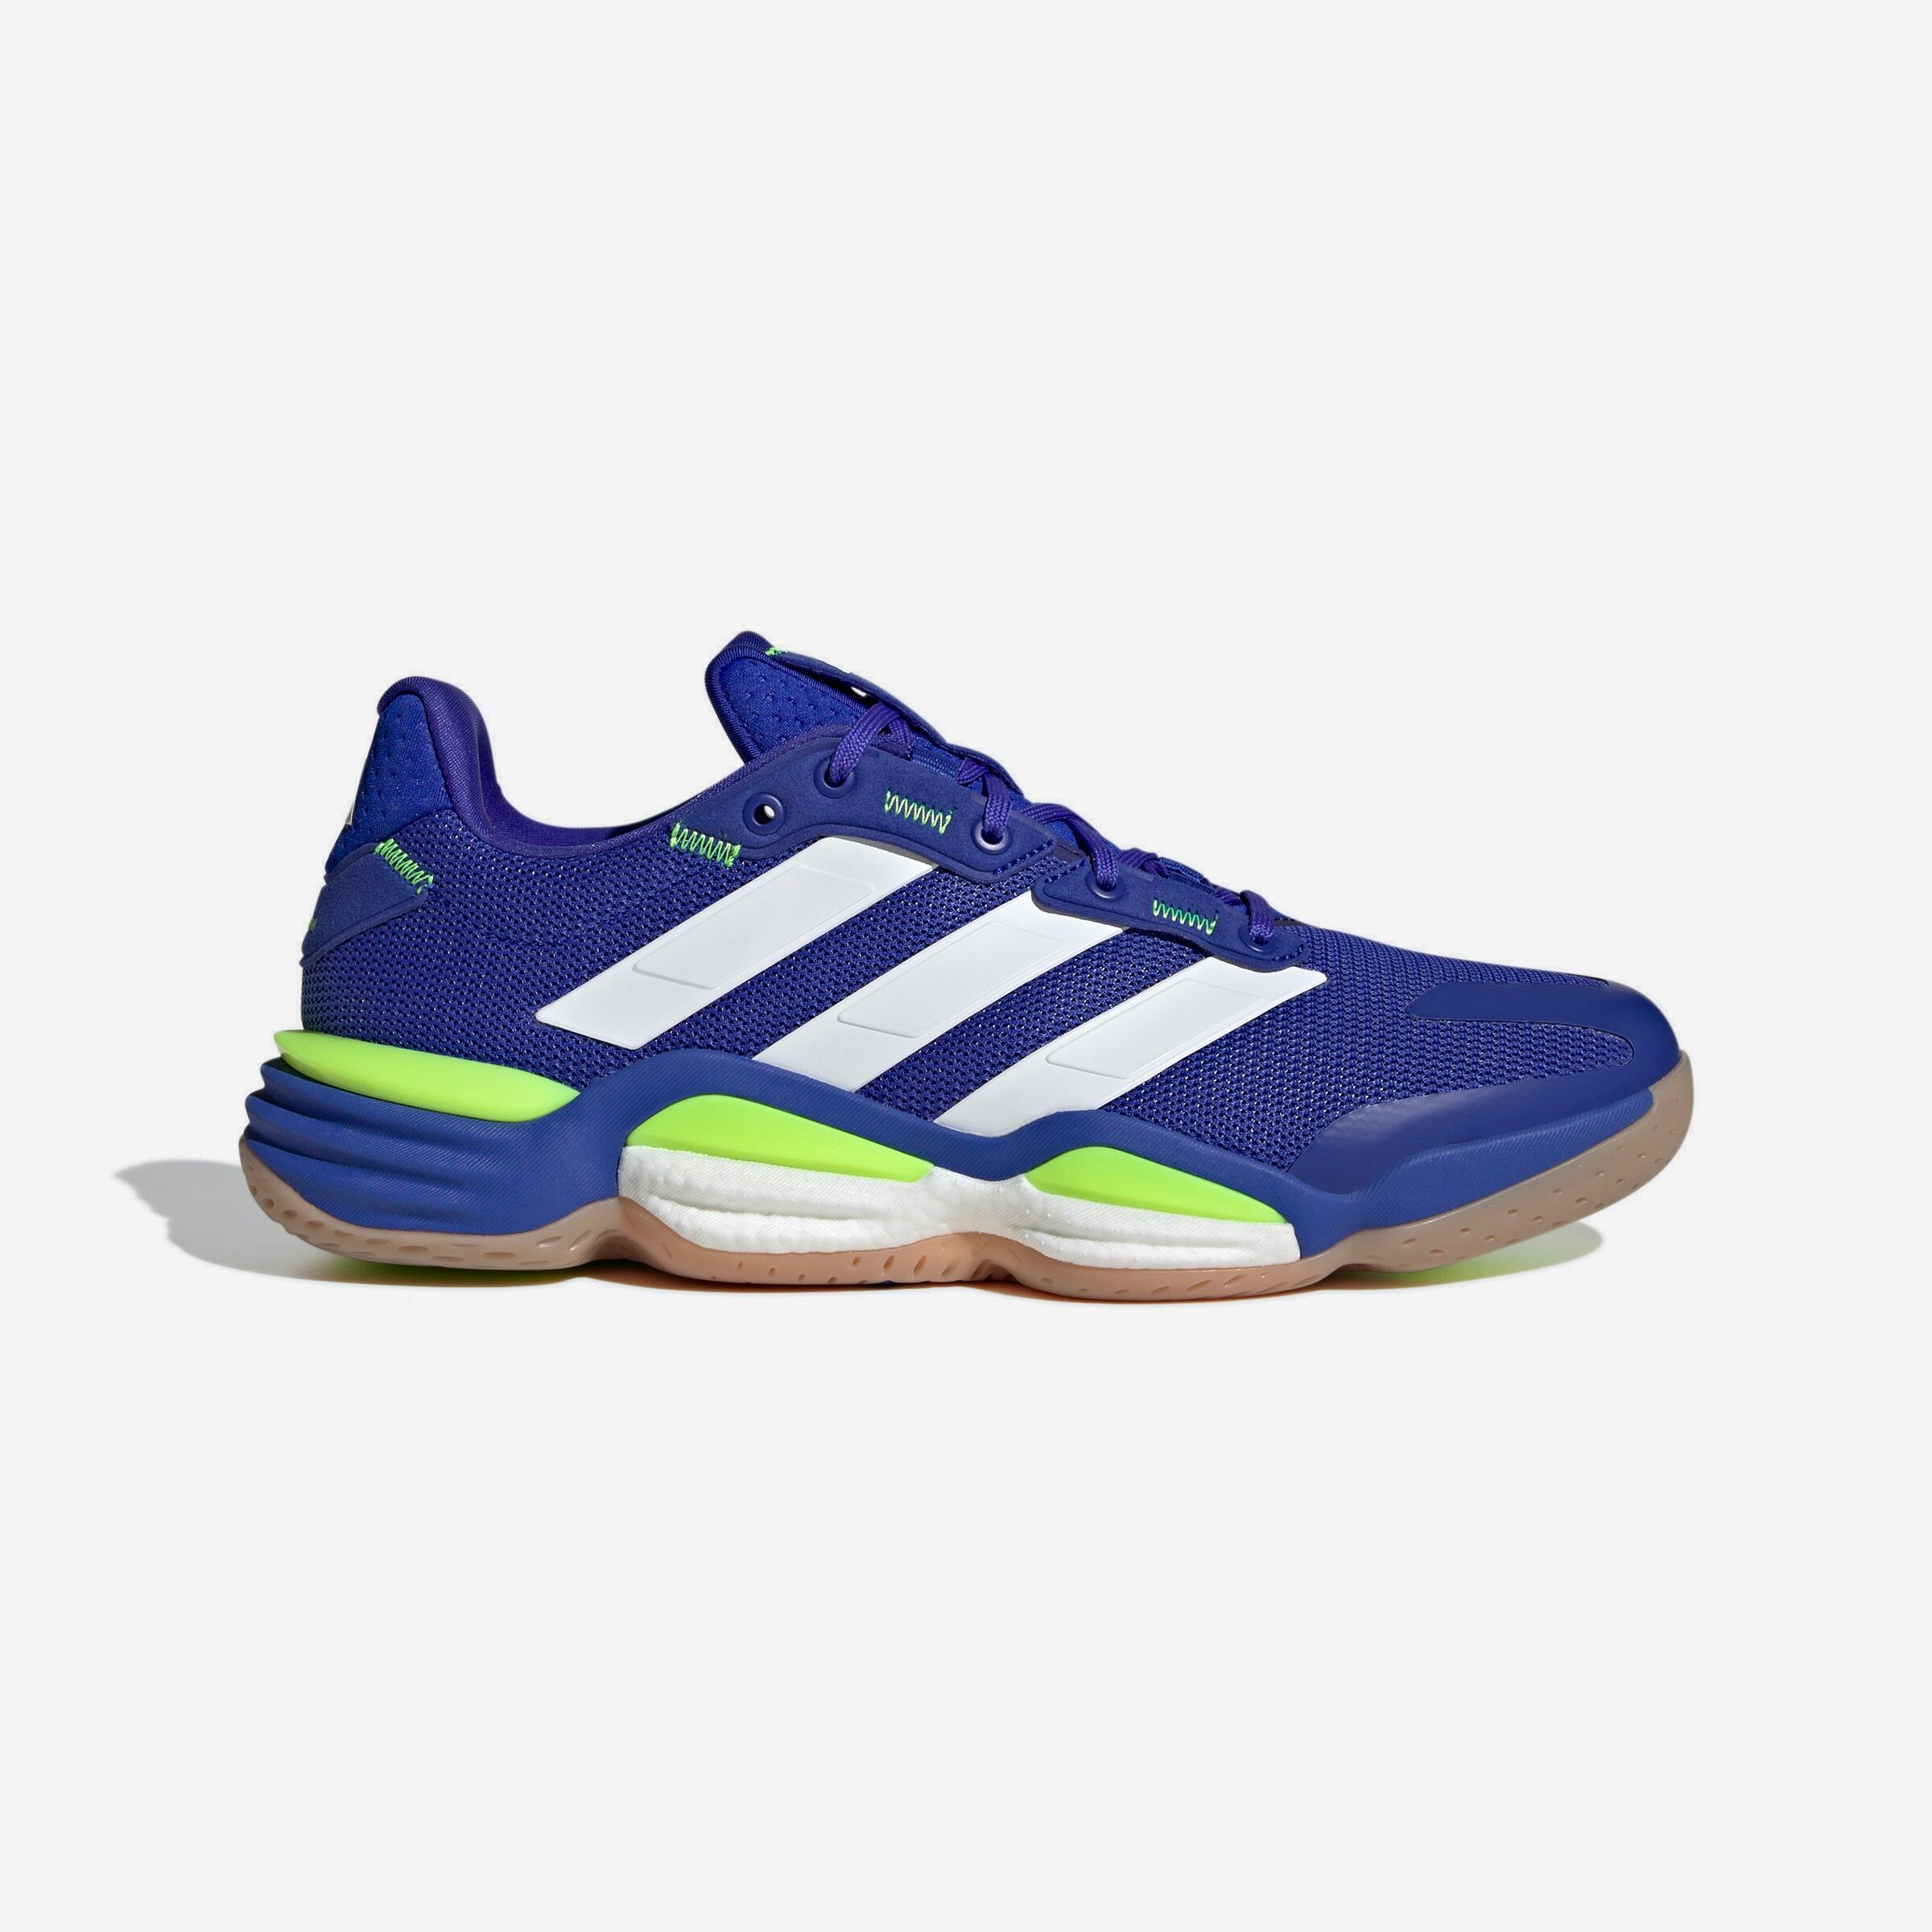 Damen/Herren Handball Hallenschuhe ‒ ADIDAS Stabil blau/neon